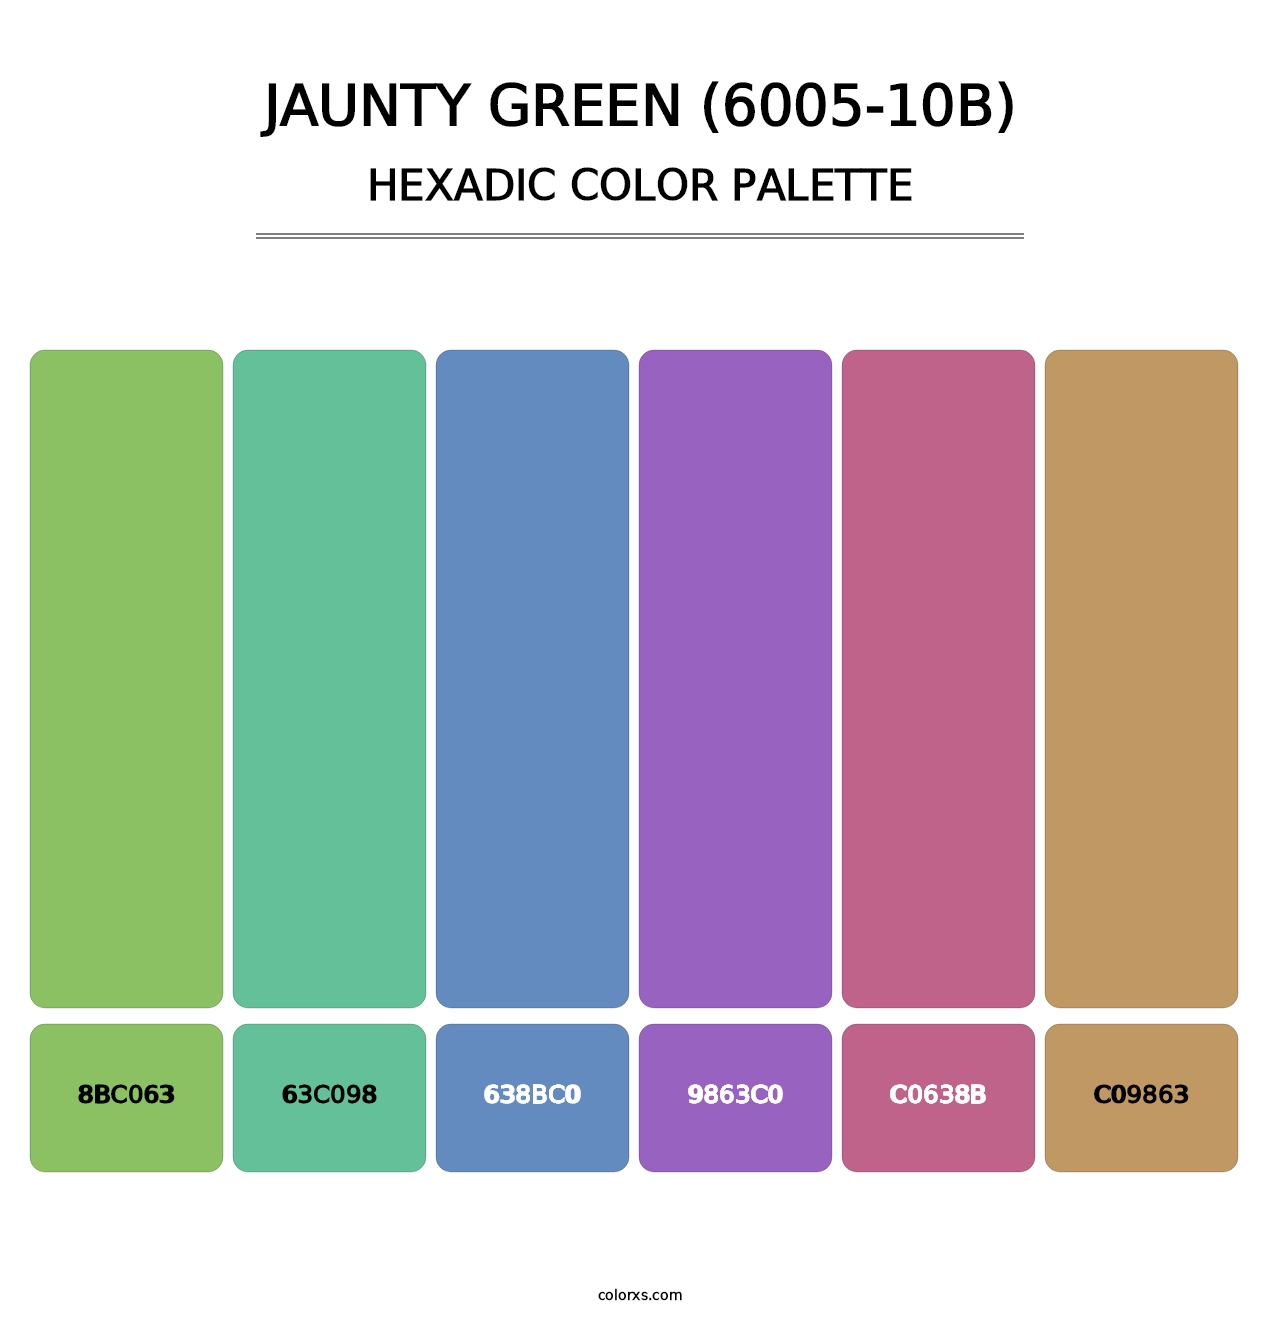 Jaunty Green (6005-10B) - Hexadic Color Palette